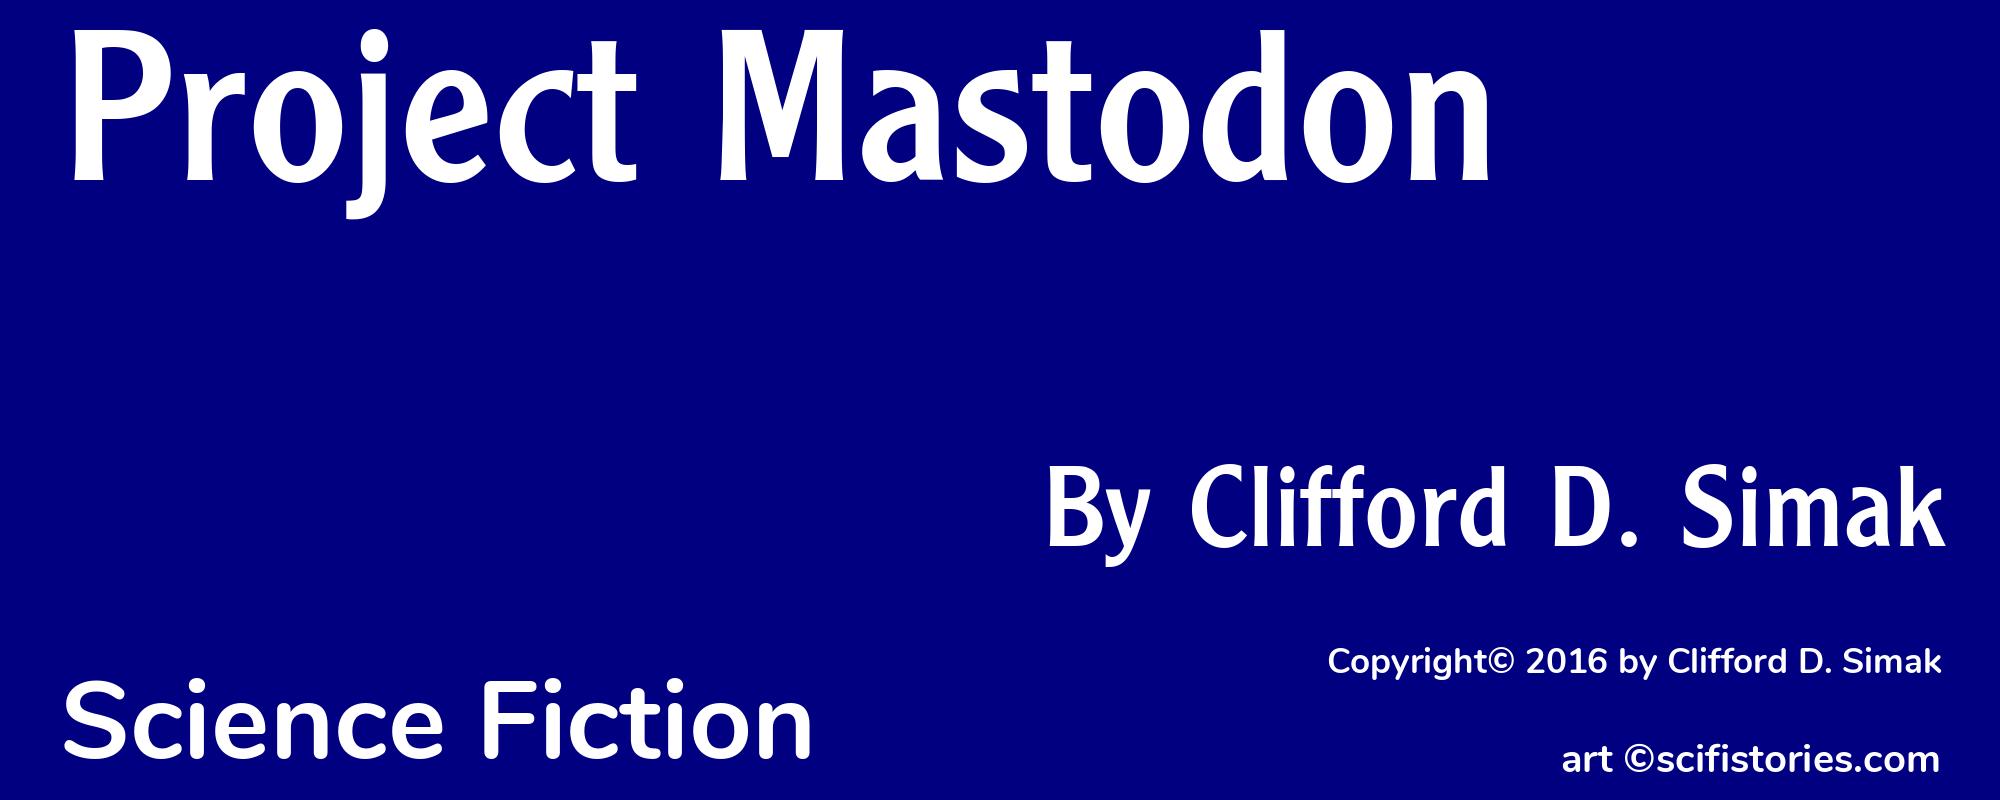 Project Mastodon - Cover